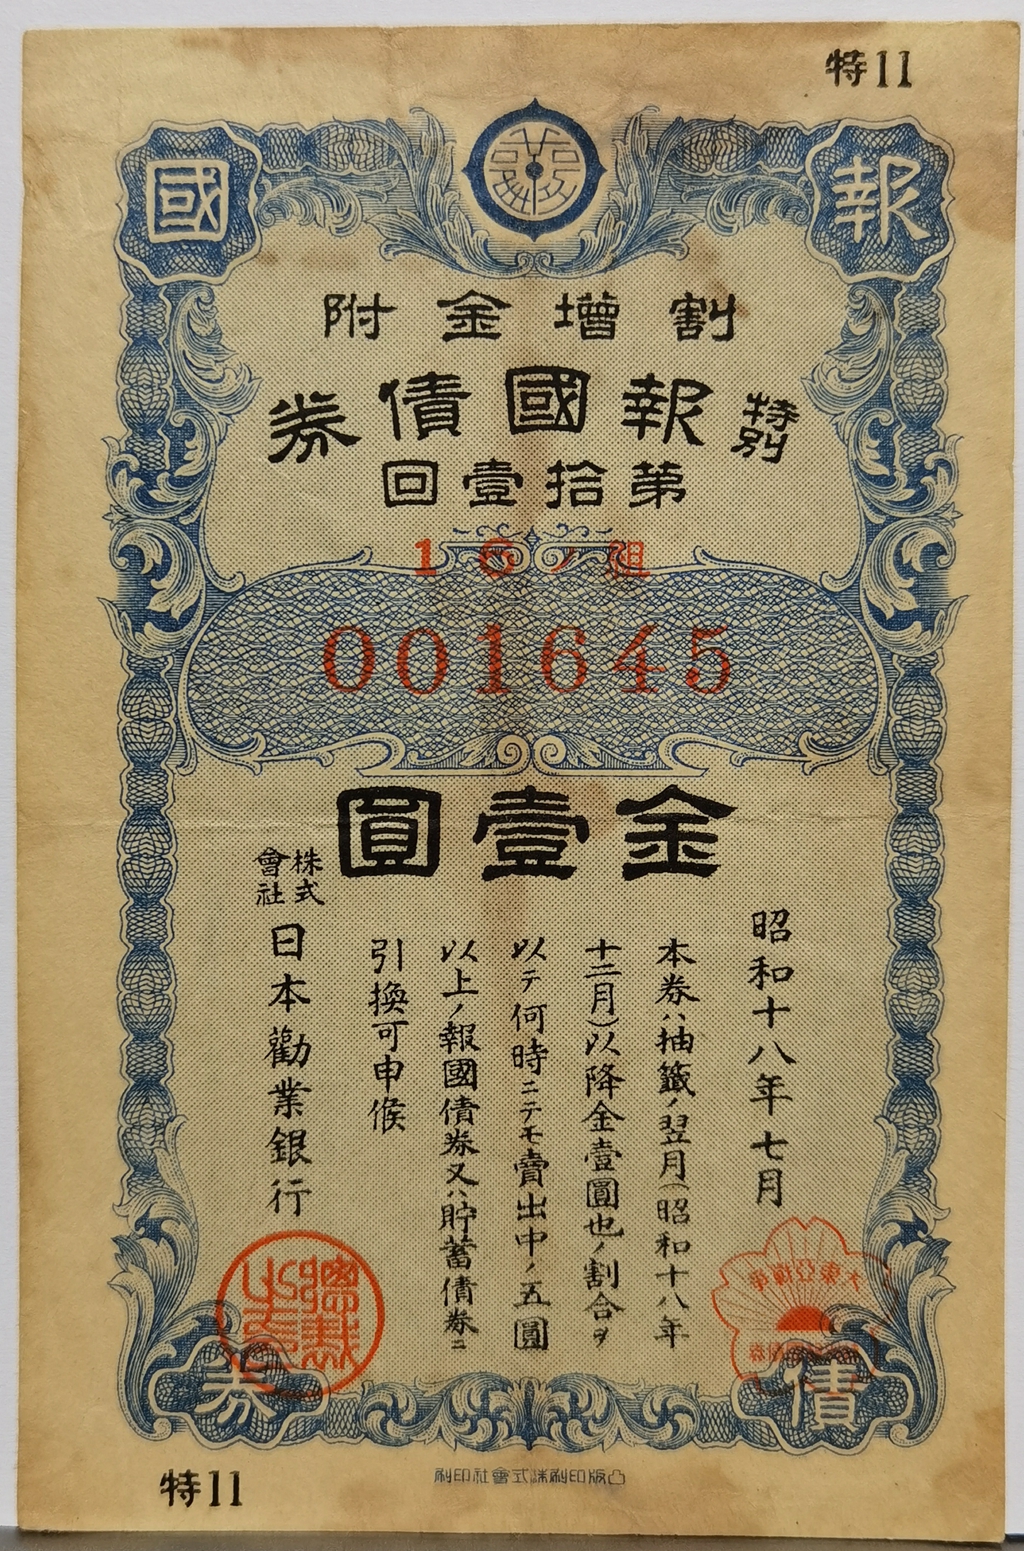 B4522, Japanese Special War Patriot Bond, 1 Gold Yen, 1943 WWII